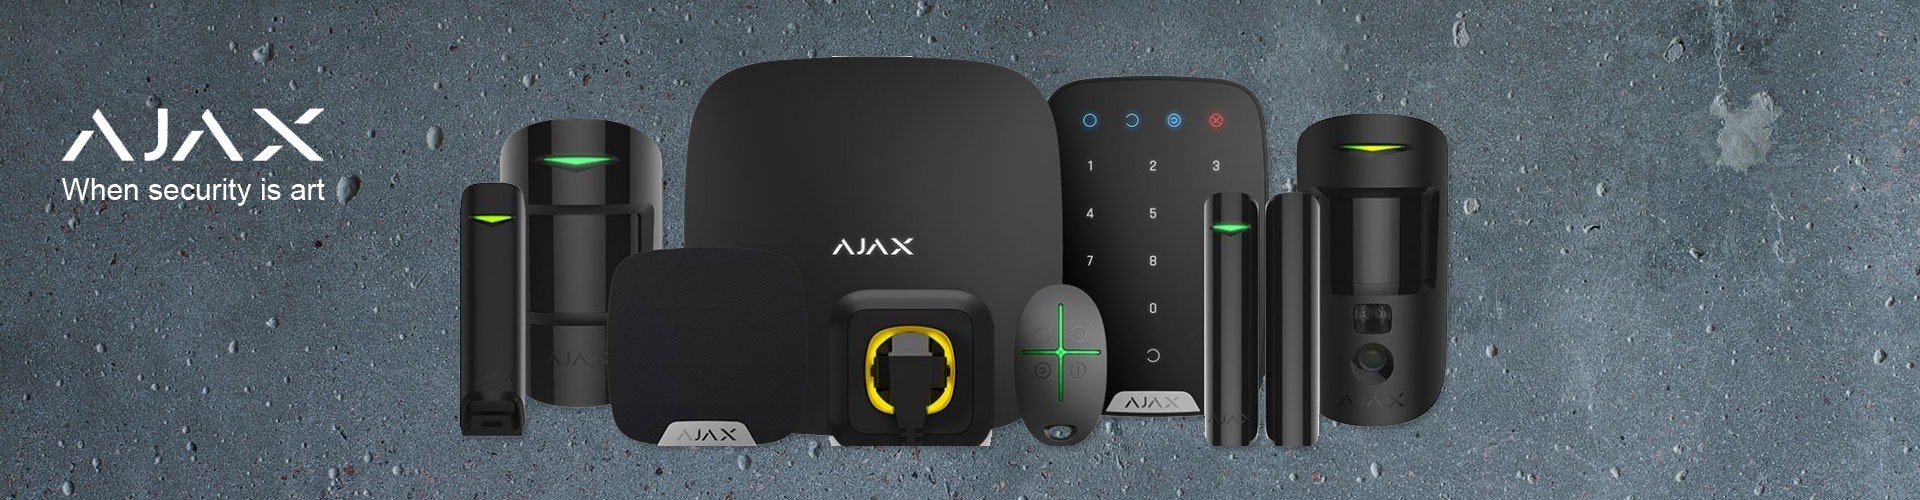 AJAX Customer reviews | Reviews of the AJAX alarm system.